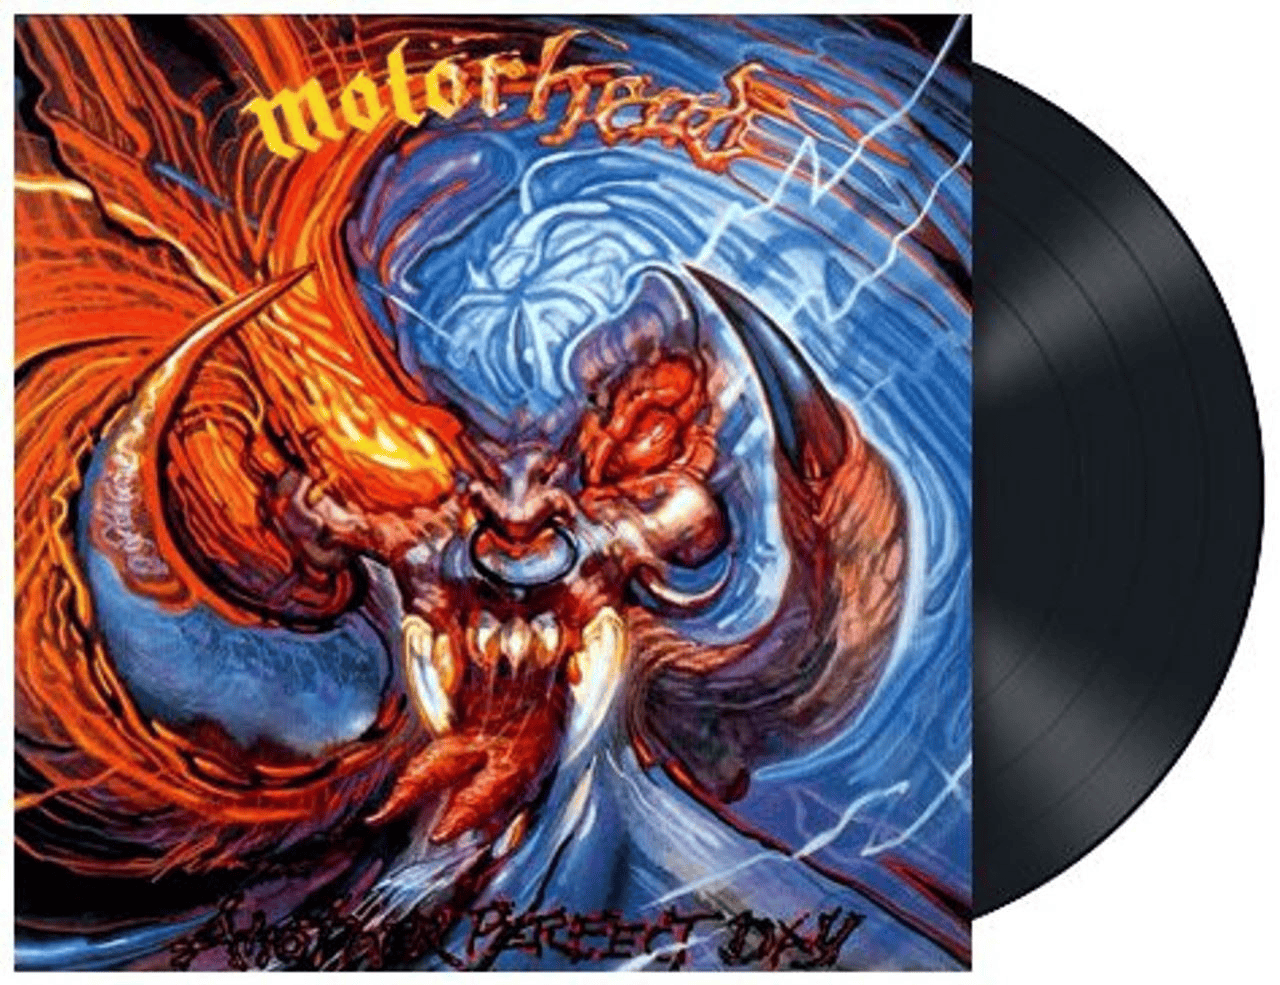 MOTORHEAD - Another Perfect Day Vinyl - JWrayRecords